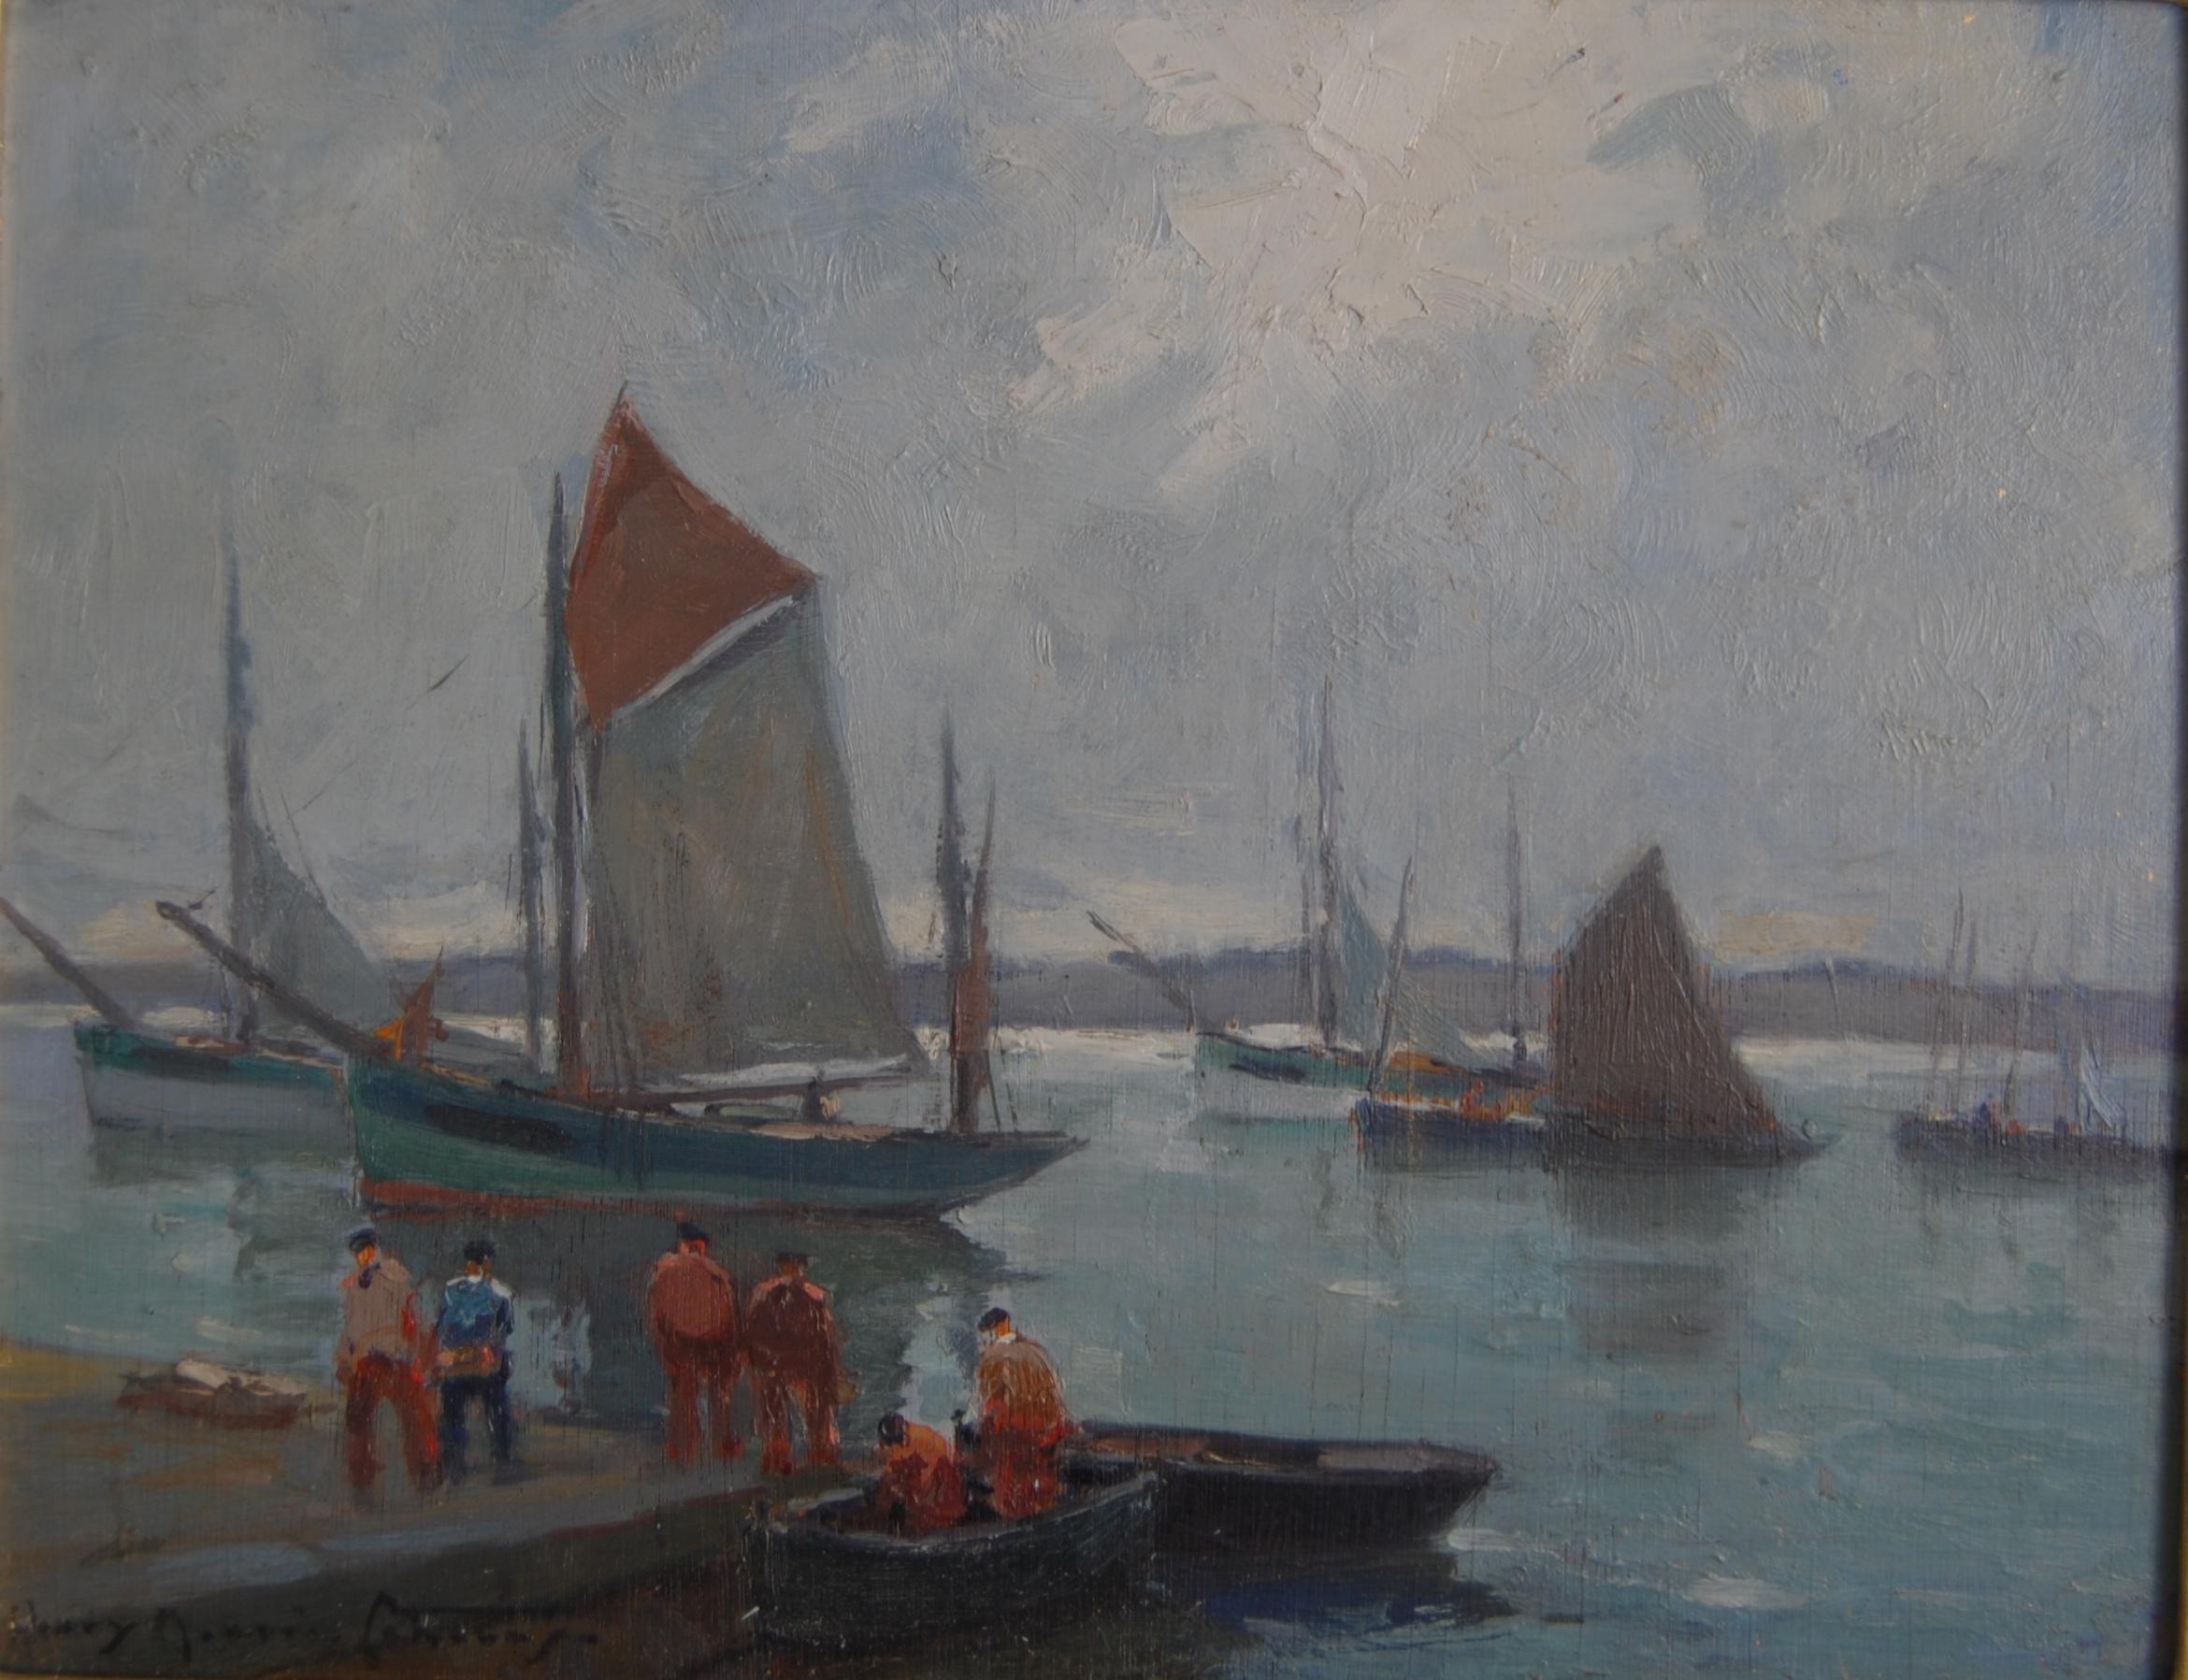 Fishermen and Boats in Douarnenez, superbe peinture à l'huile post-impressionniste française